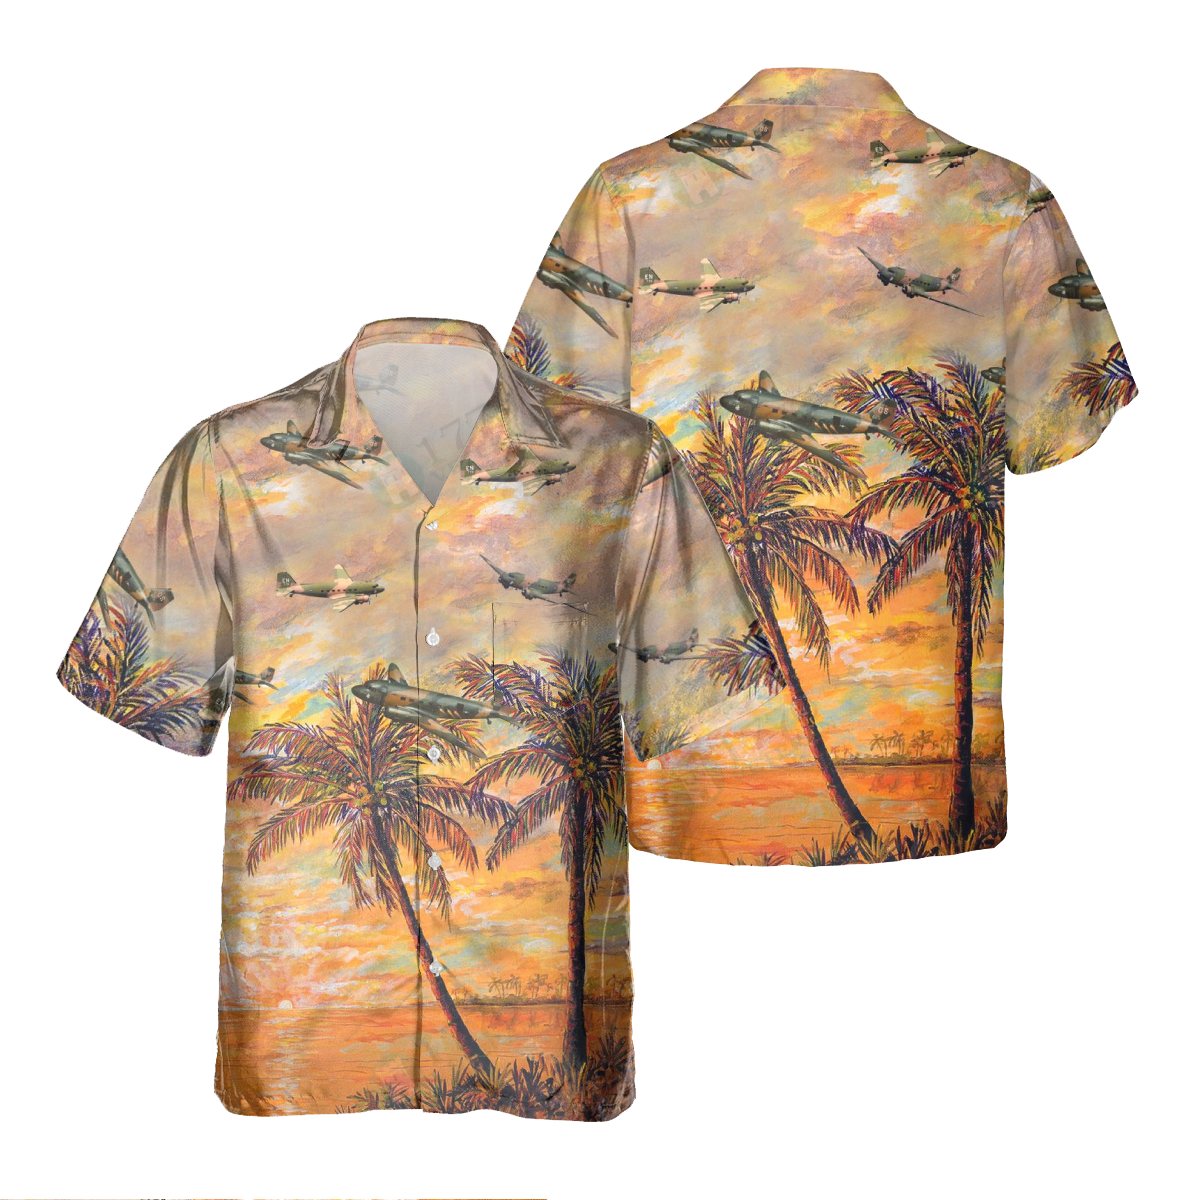 Ac-47 Spooky Pocket Hawaiian Shirt/ Hawaiian Shirt for Men Dad Veteran/ Patriot Day